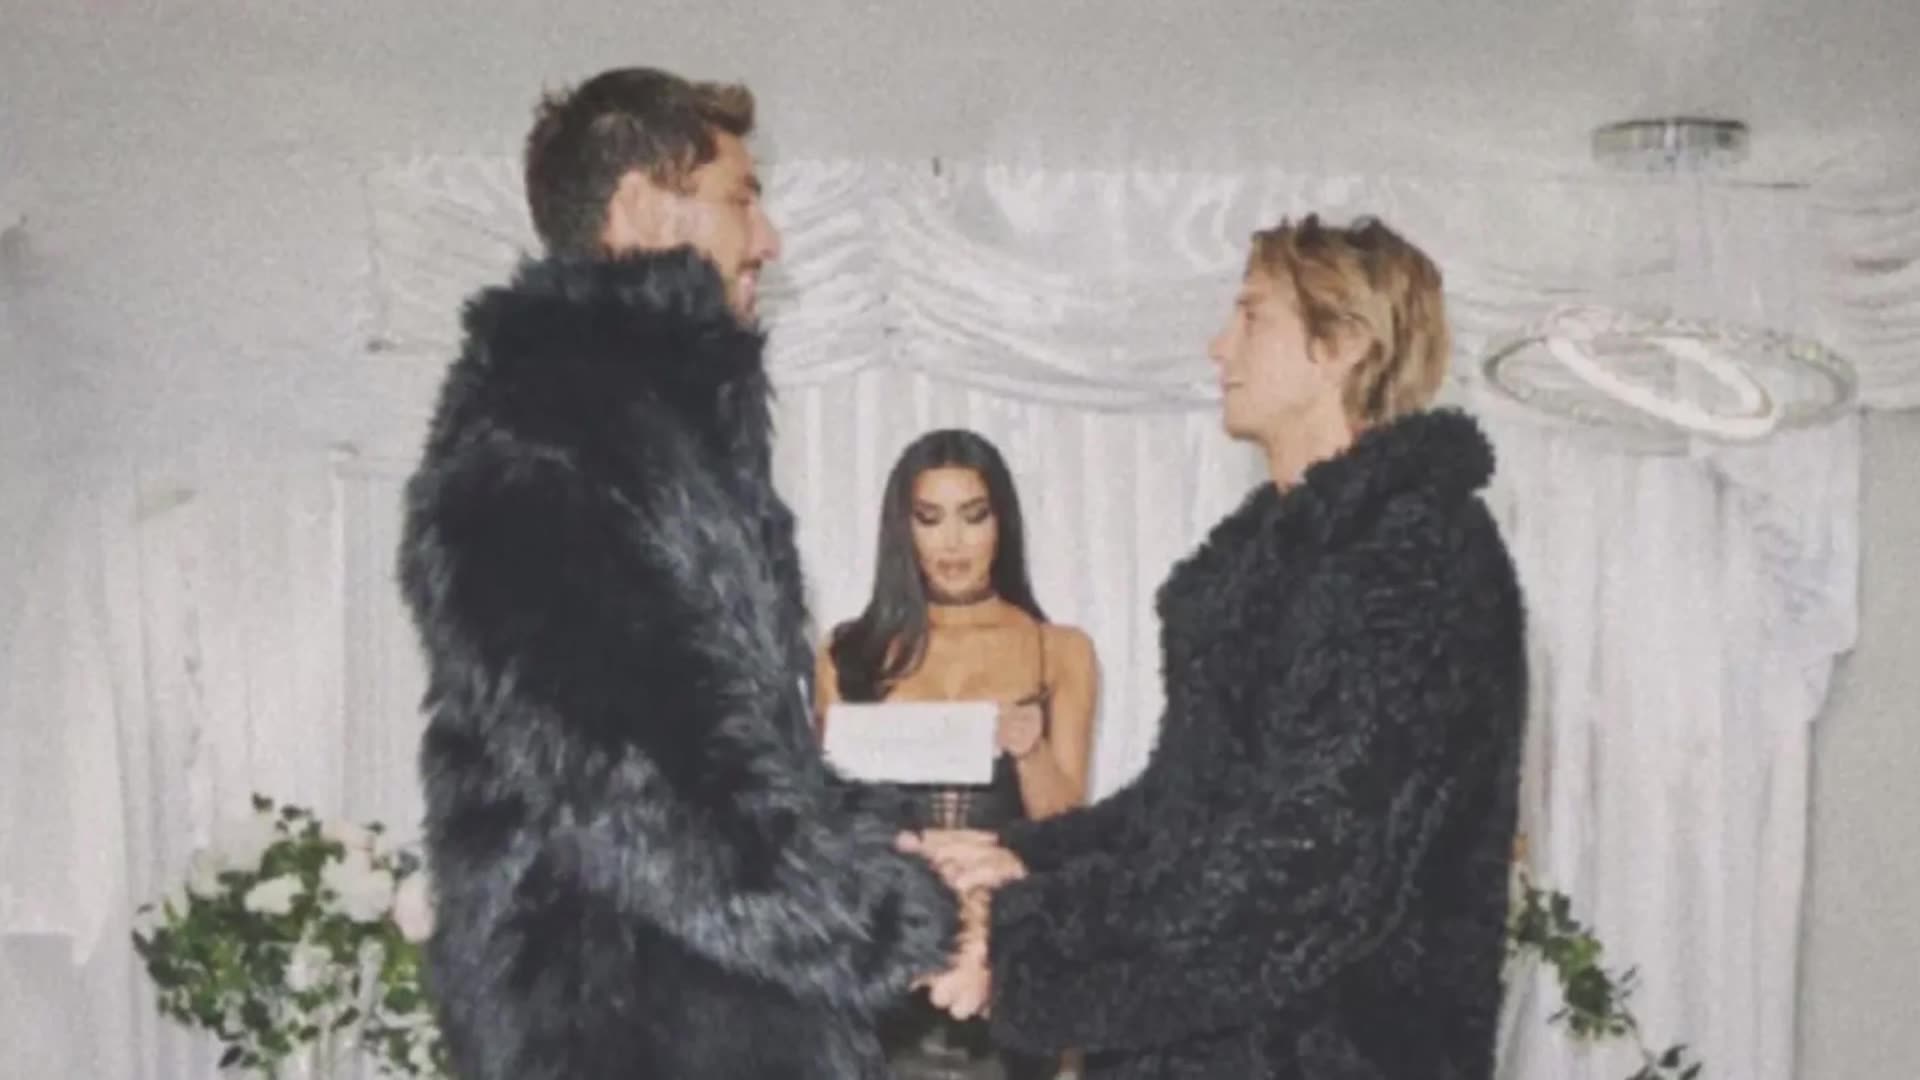 Kim Kardashian's hairstylist Chris Appleton files for divorce days after wedding featured on 'The Kardashians'